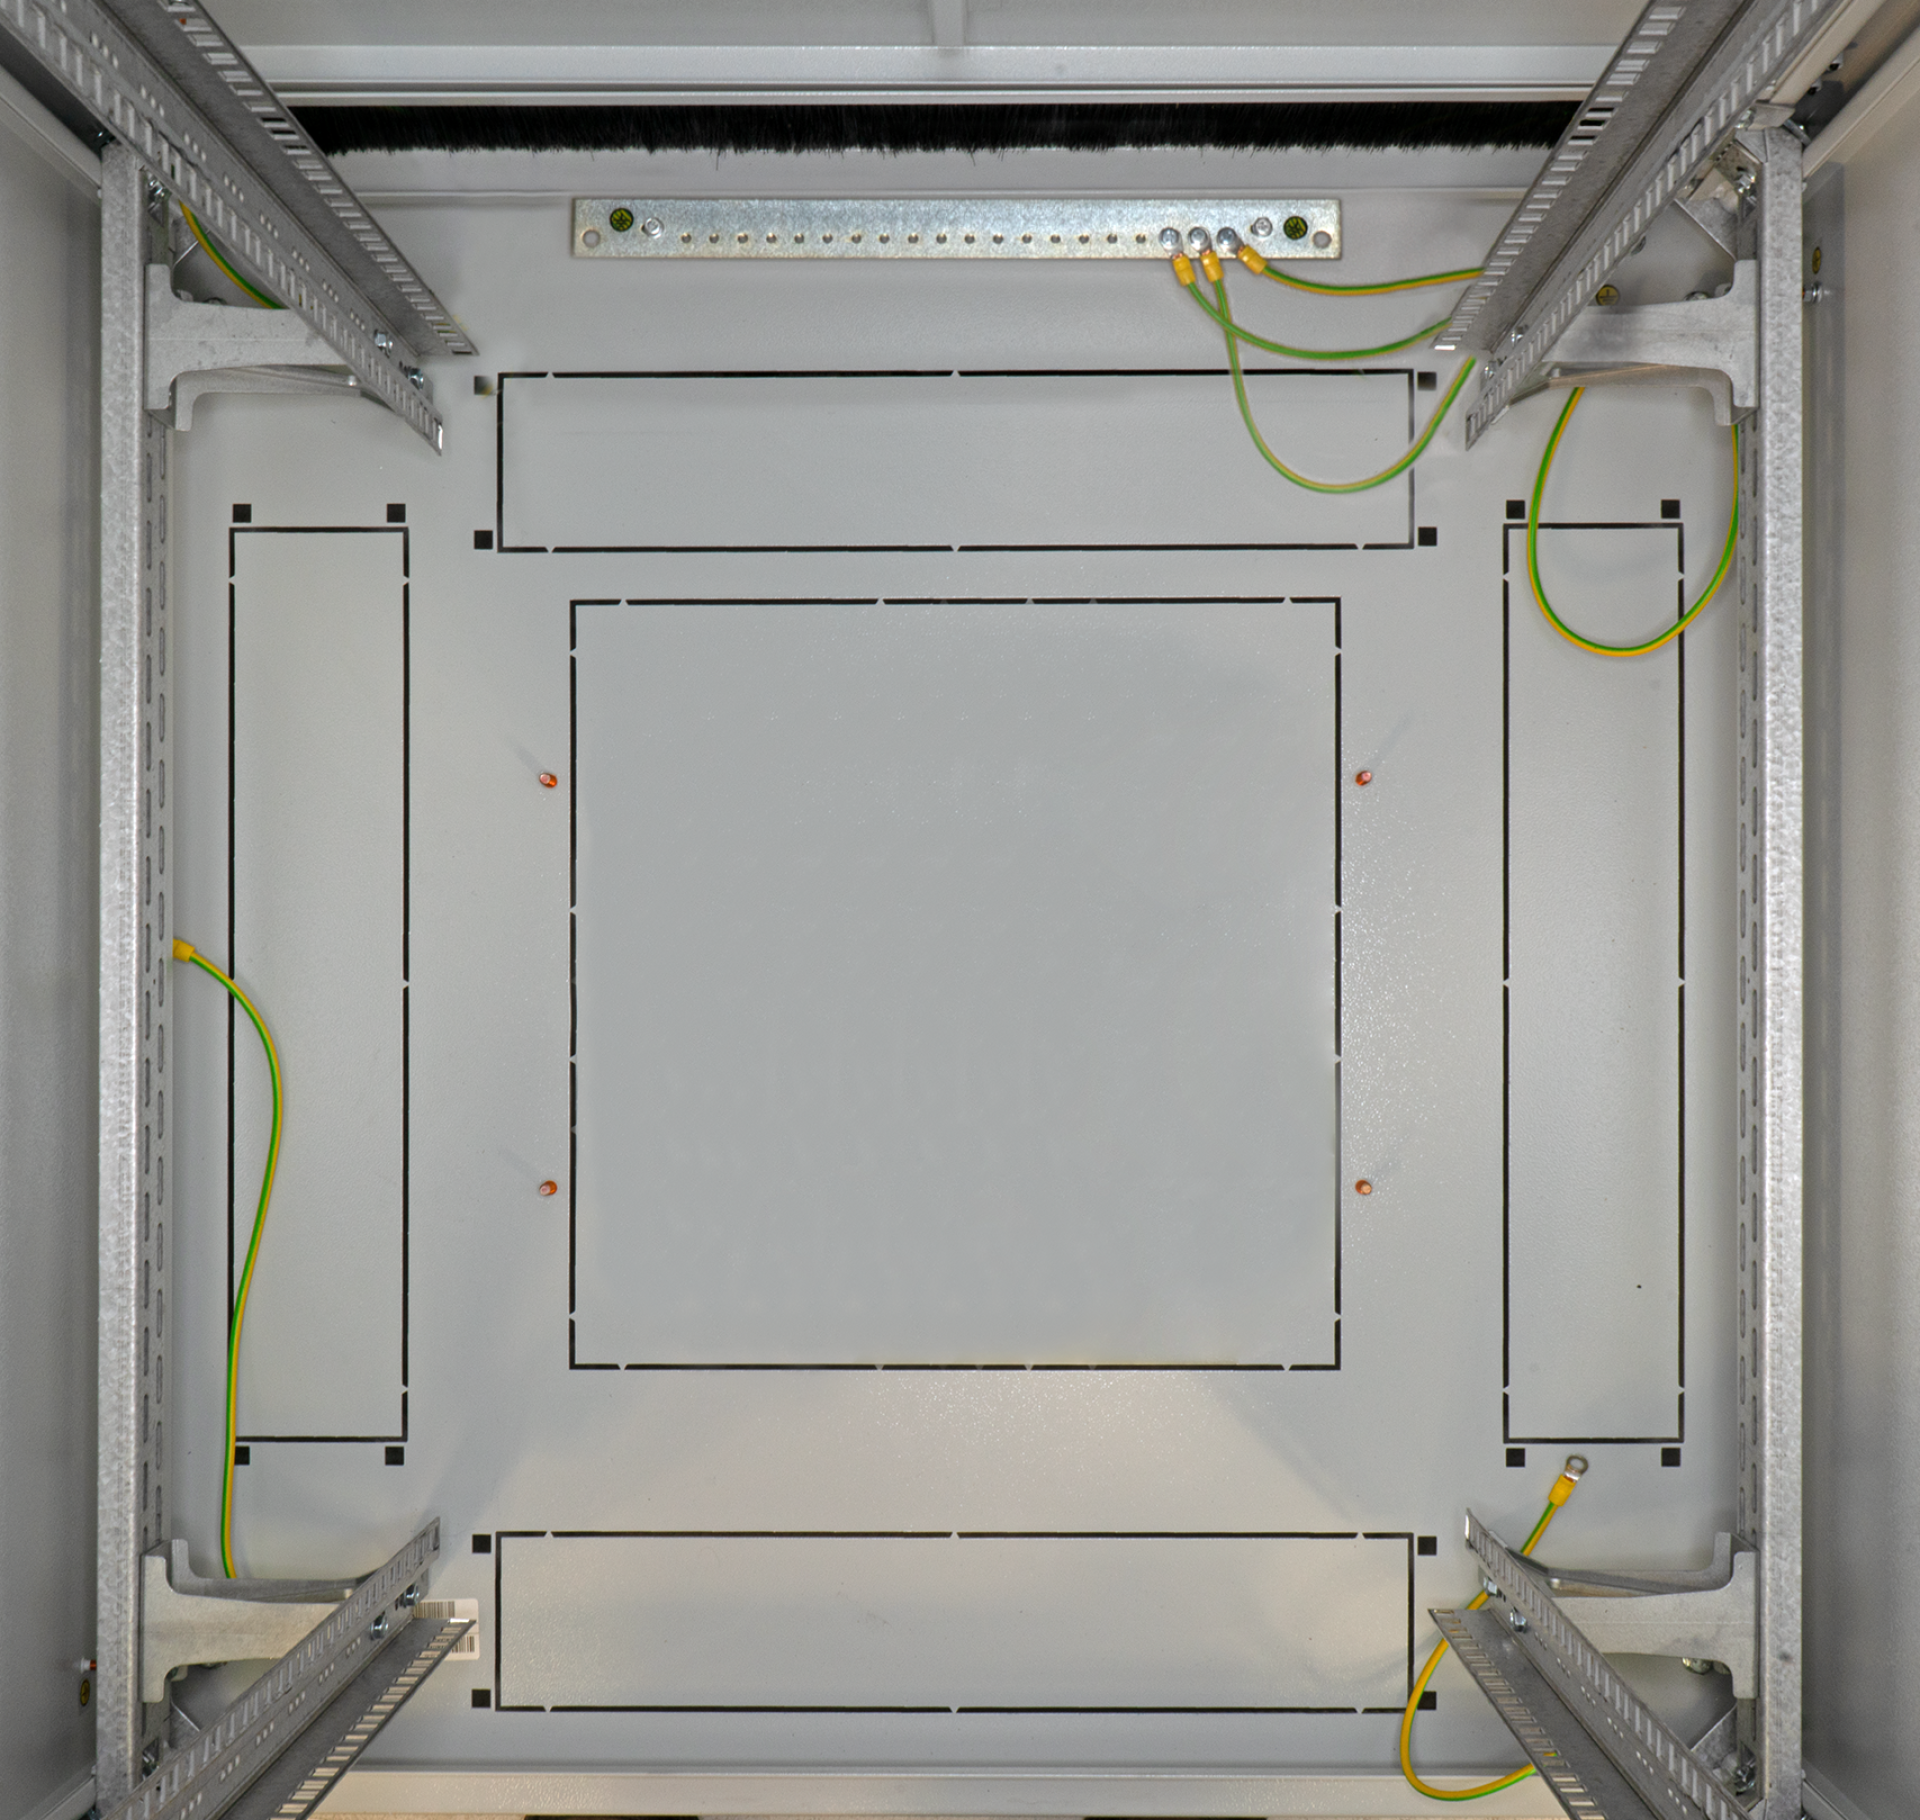 19" Network Cabinet PRO-Modular 42U, 800x1000 mm, RAL9005